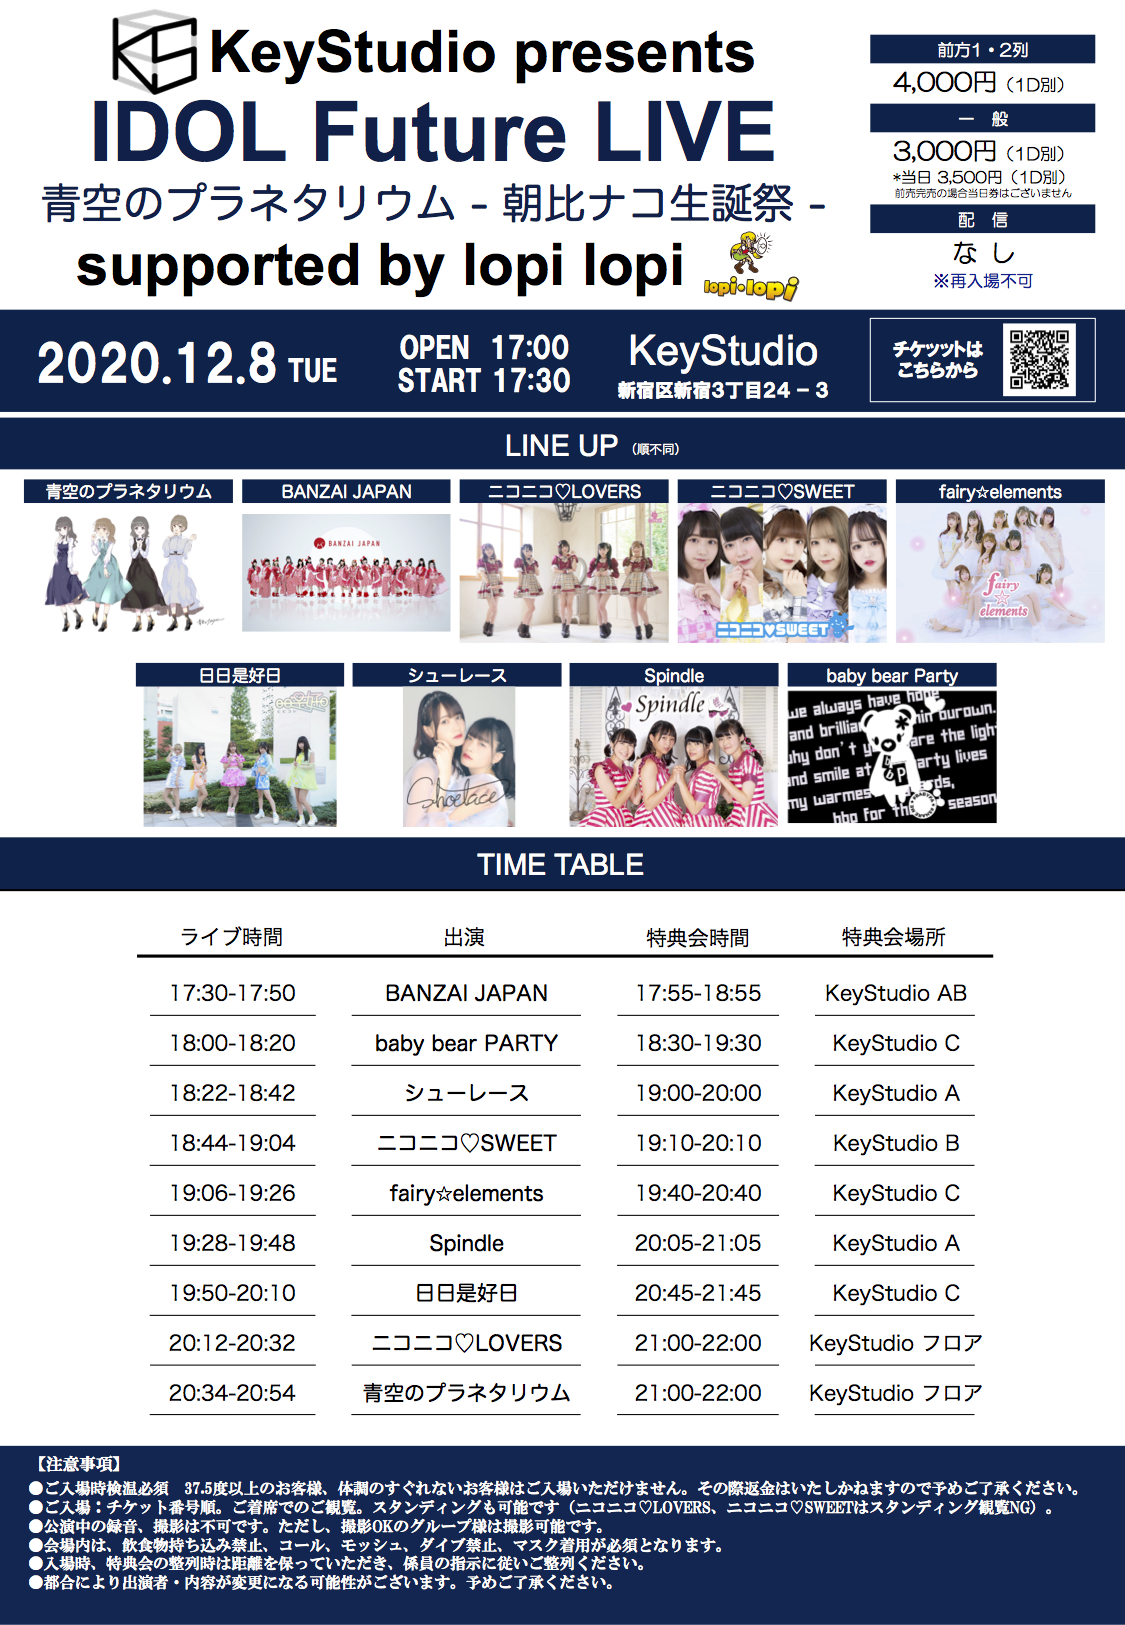 KeyStudio Presents IDOL Future LIVE 1208 supported by lopi lopi 〜青空のプラネタリウム-朝比ナコ生誕祭スペシャル〜